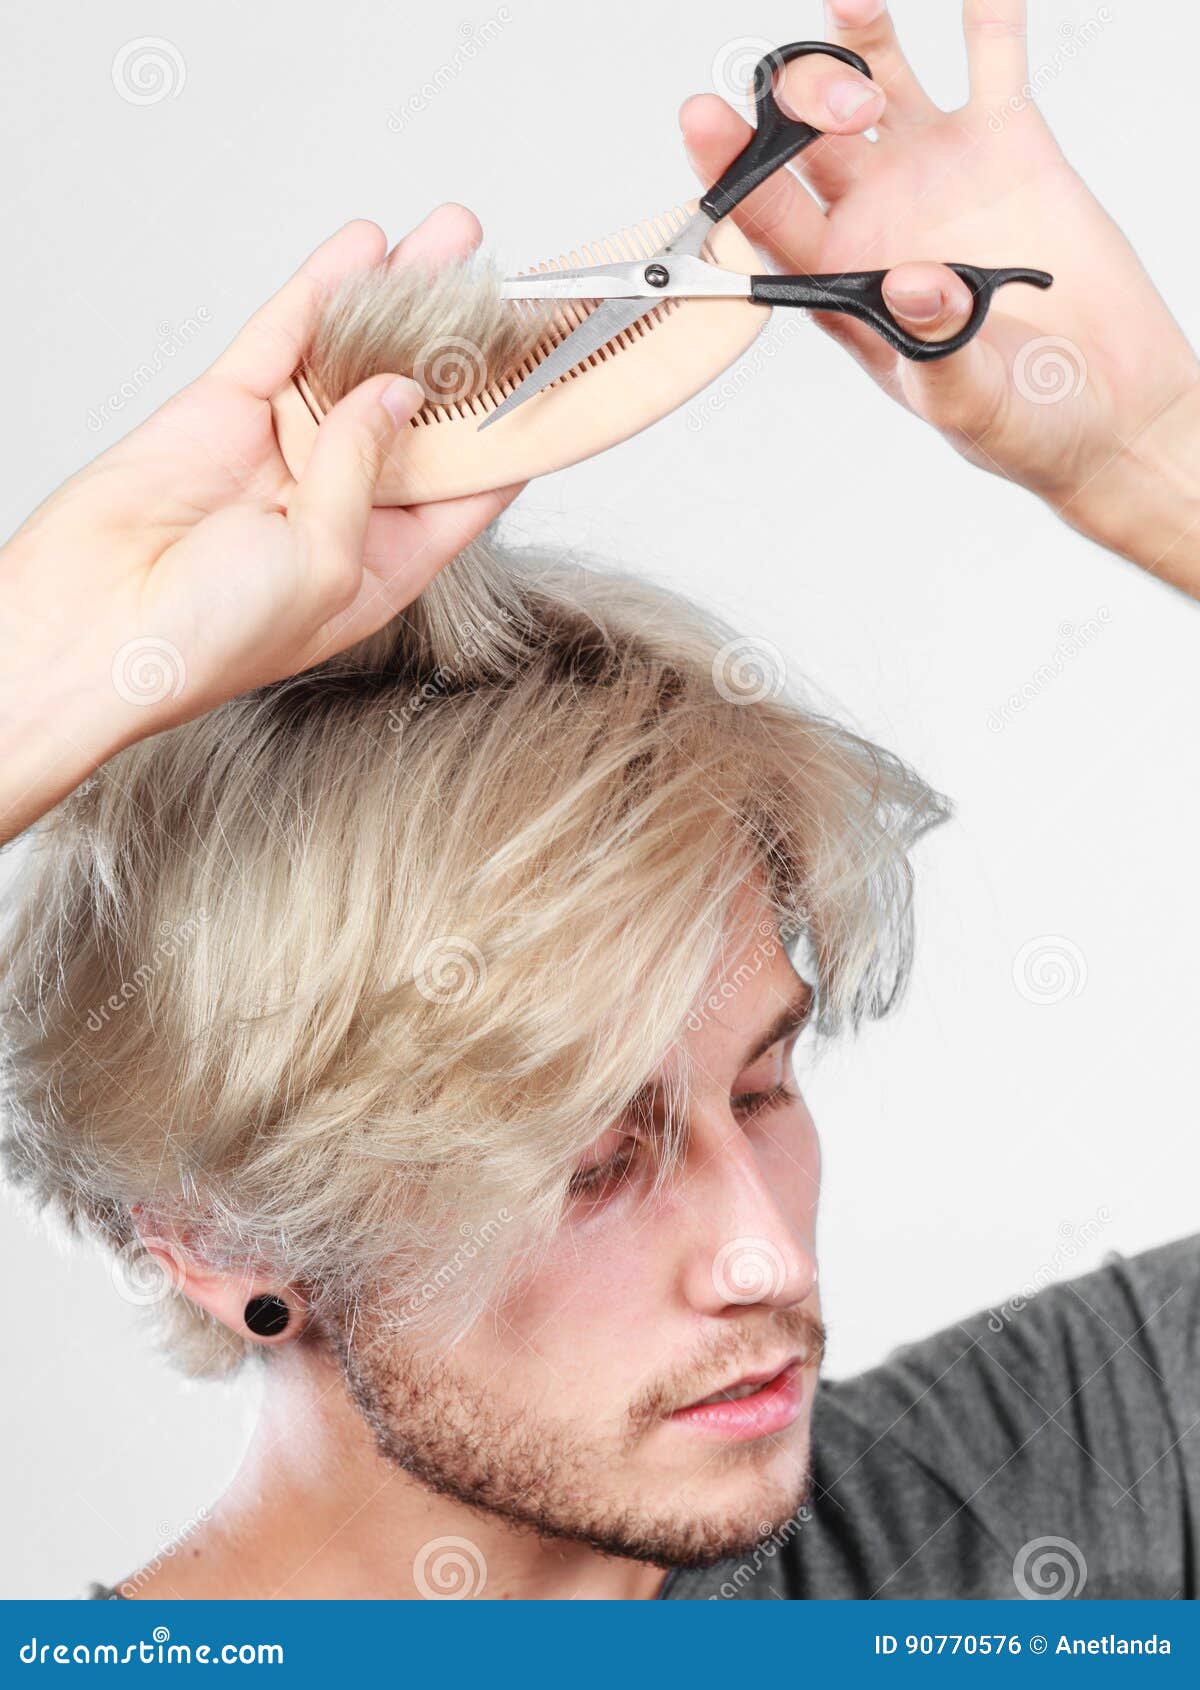 cortar cabelo masculino com tesoura